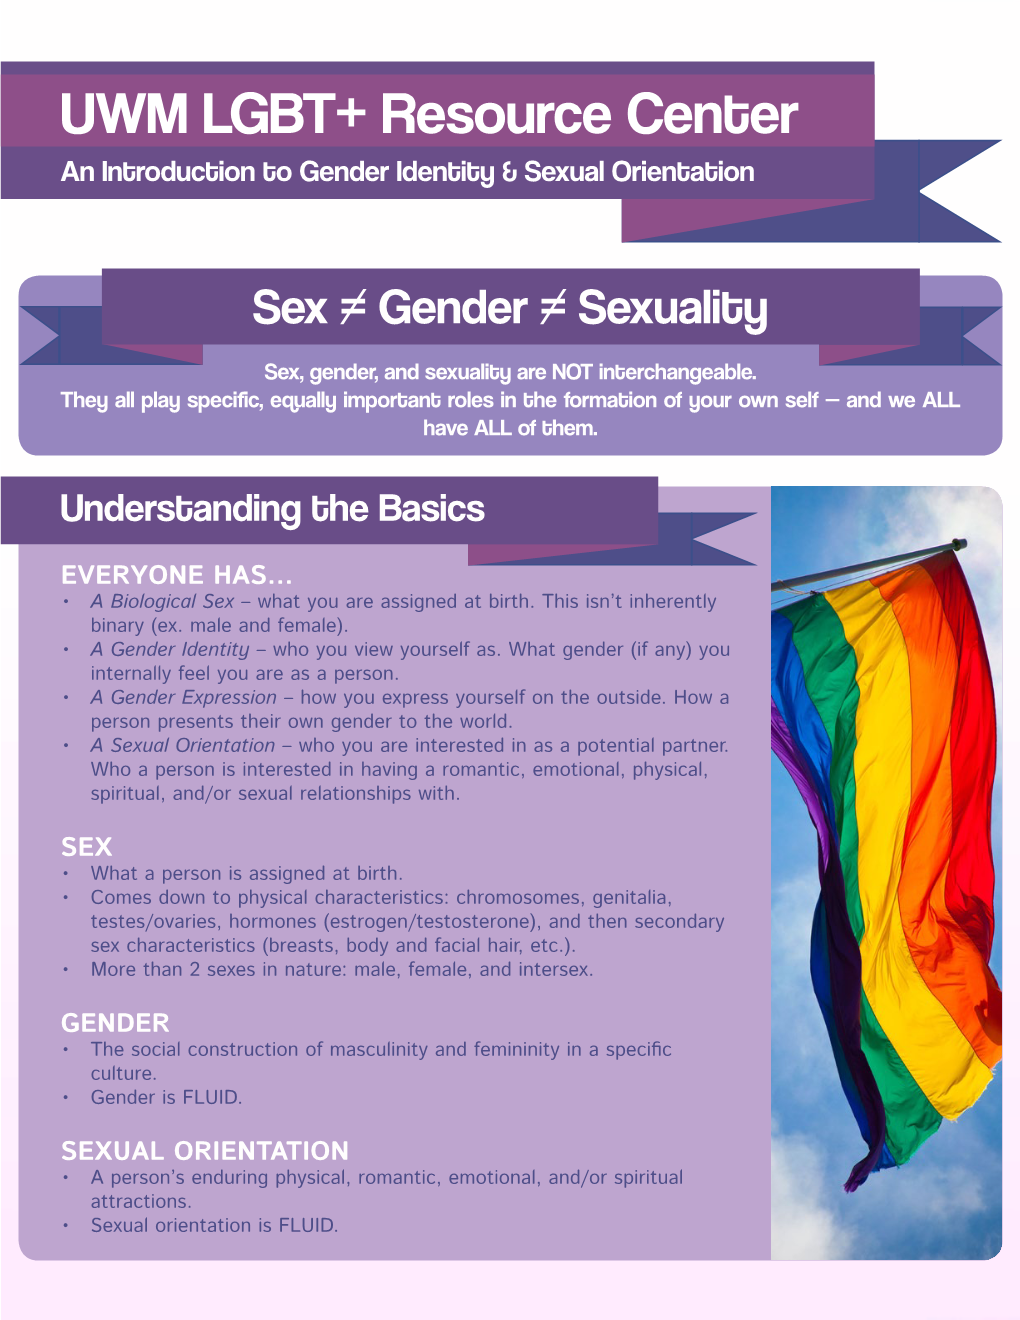 UW Milwaukee LGBT Resource Center Terminology Sheet